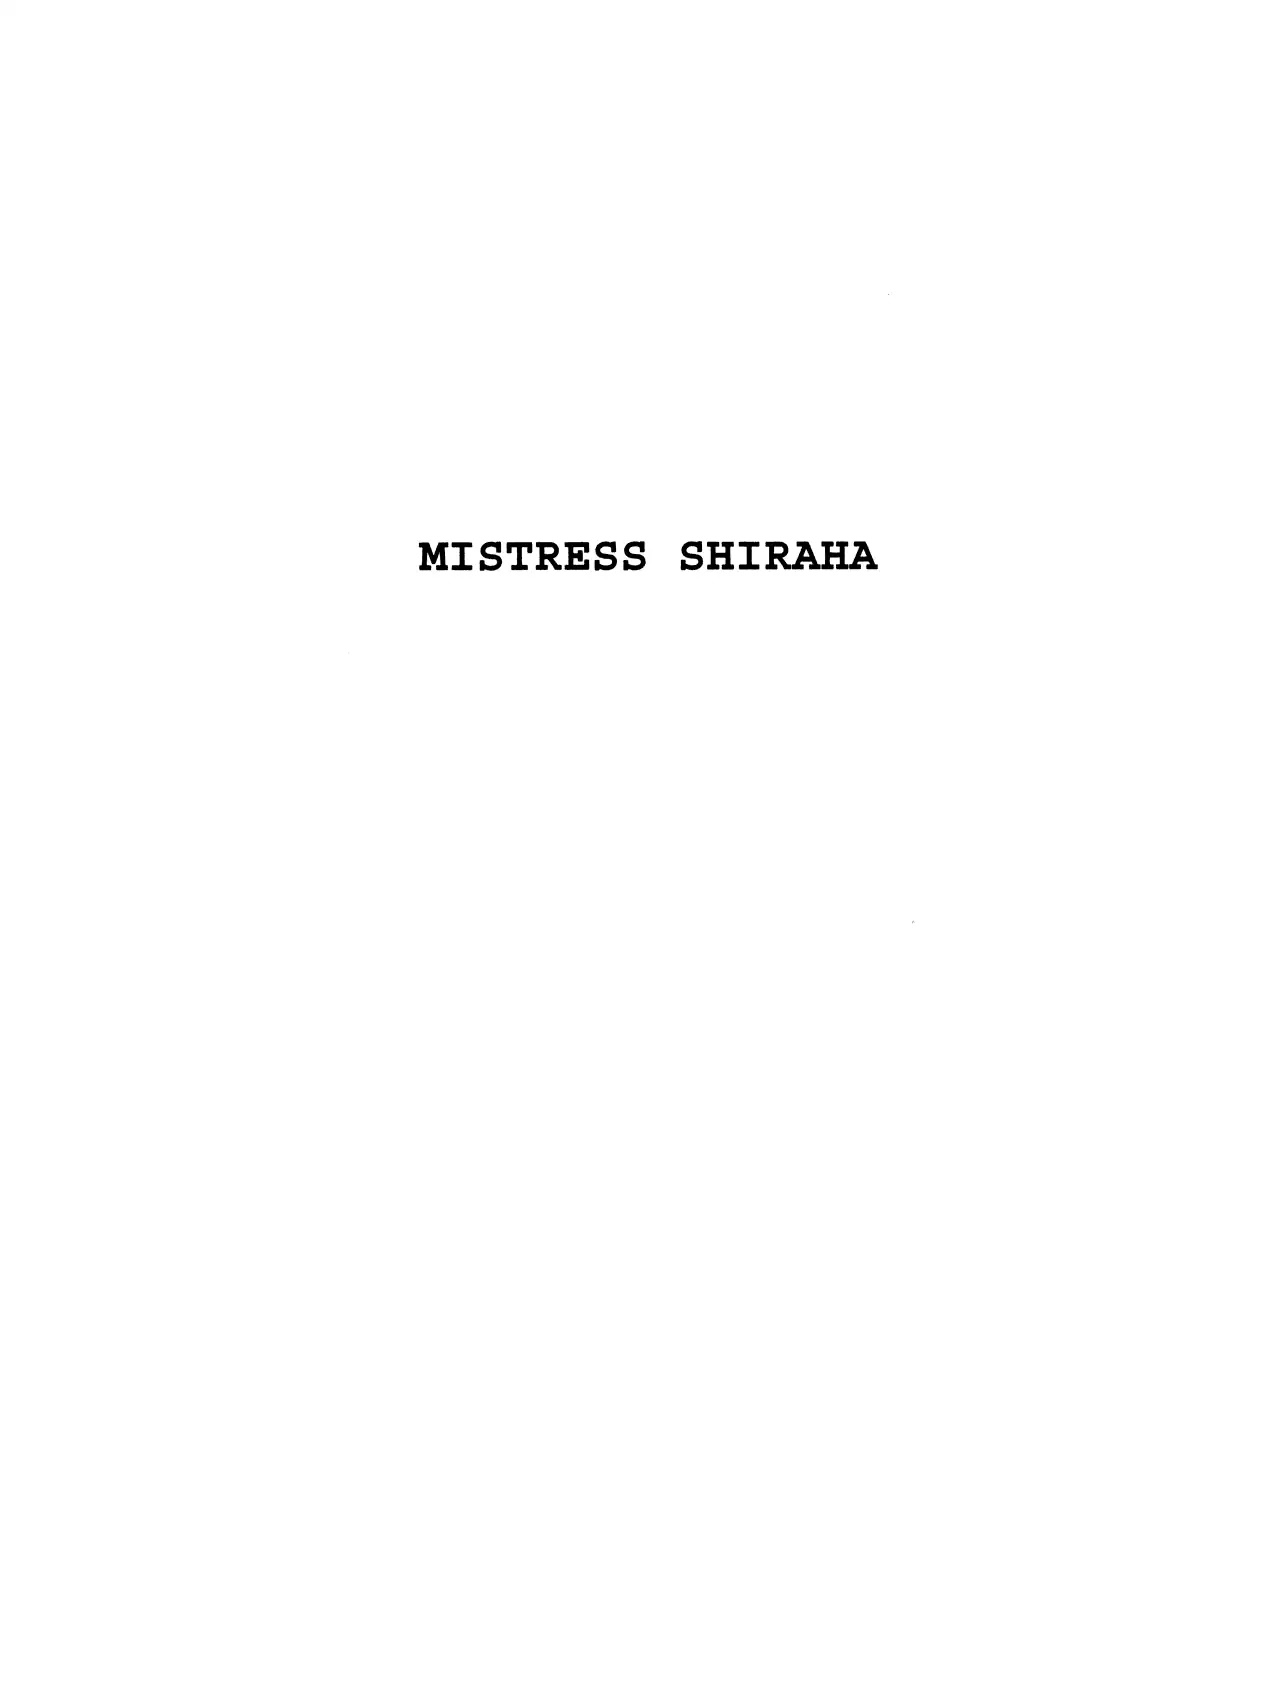 Black Jack Vol.9 Chapter 10: Mistress Shiraha - Picture 1